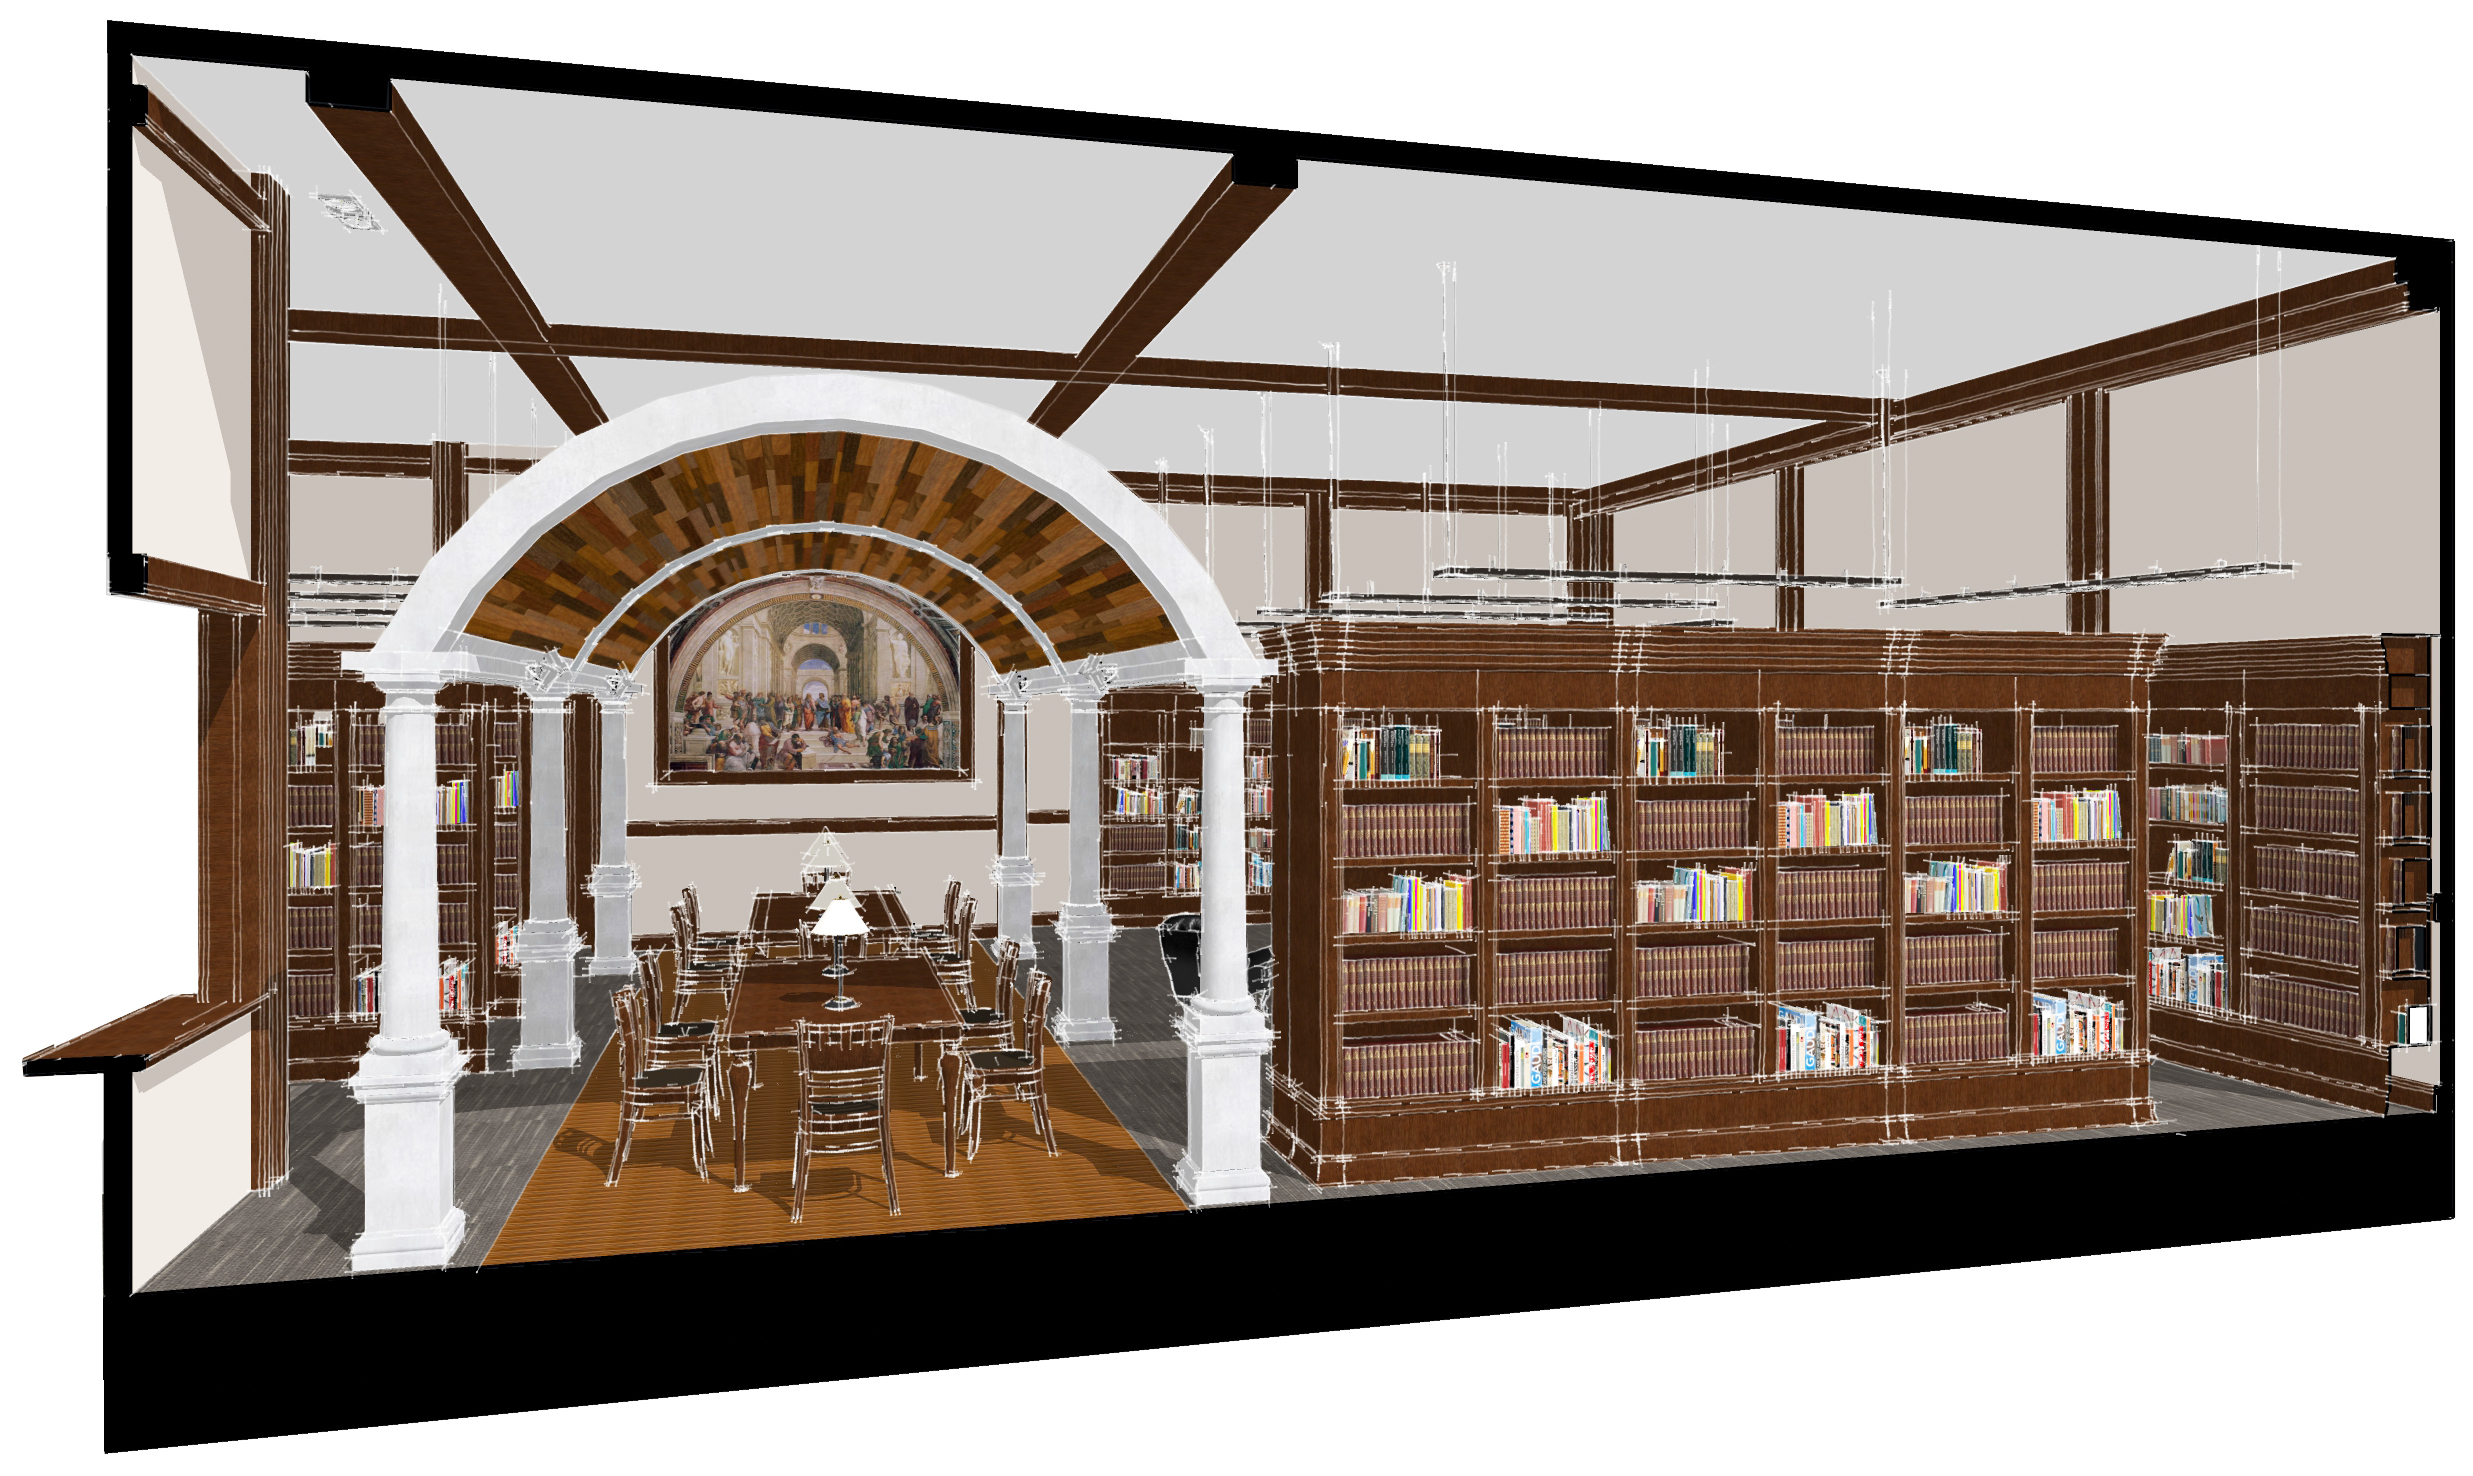 court librabry interior